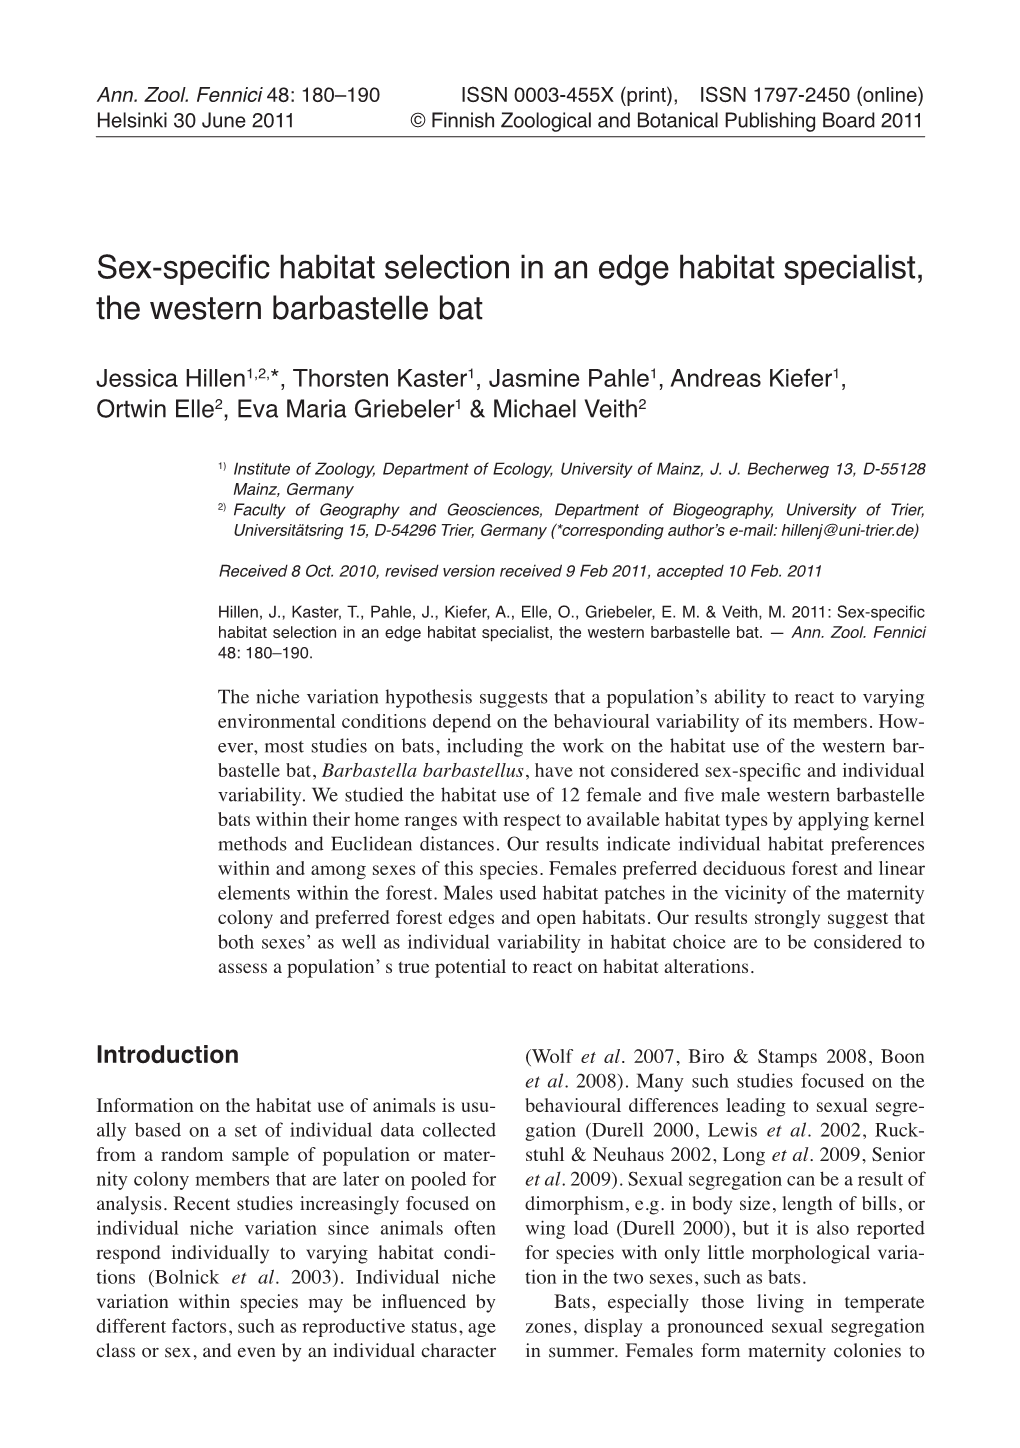 Sex-Specific Habitat Selection in an Edge Habitat Specialist, the Western Barbastelle Bat